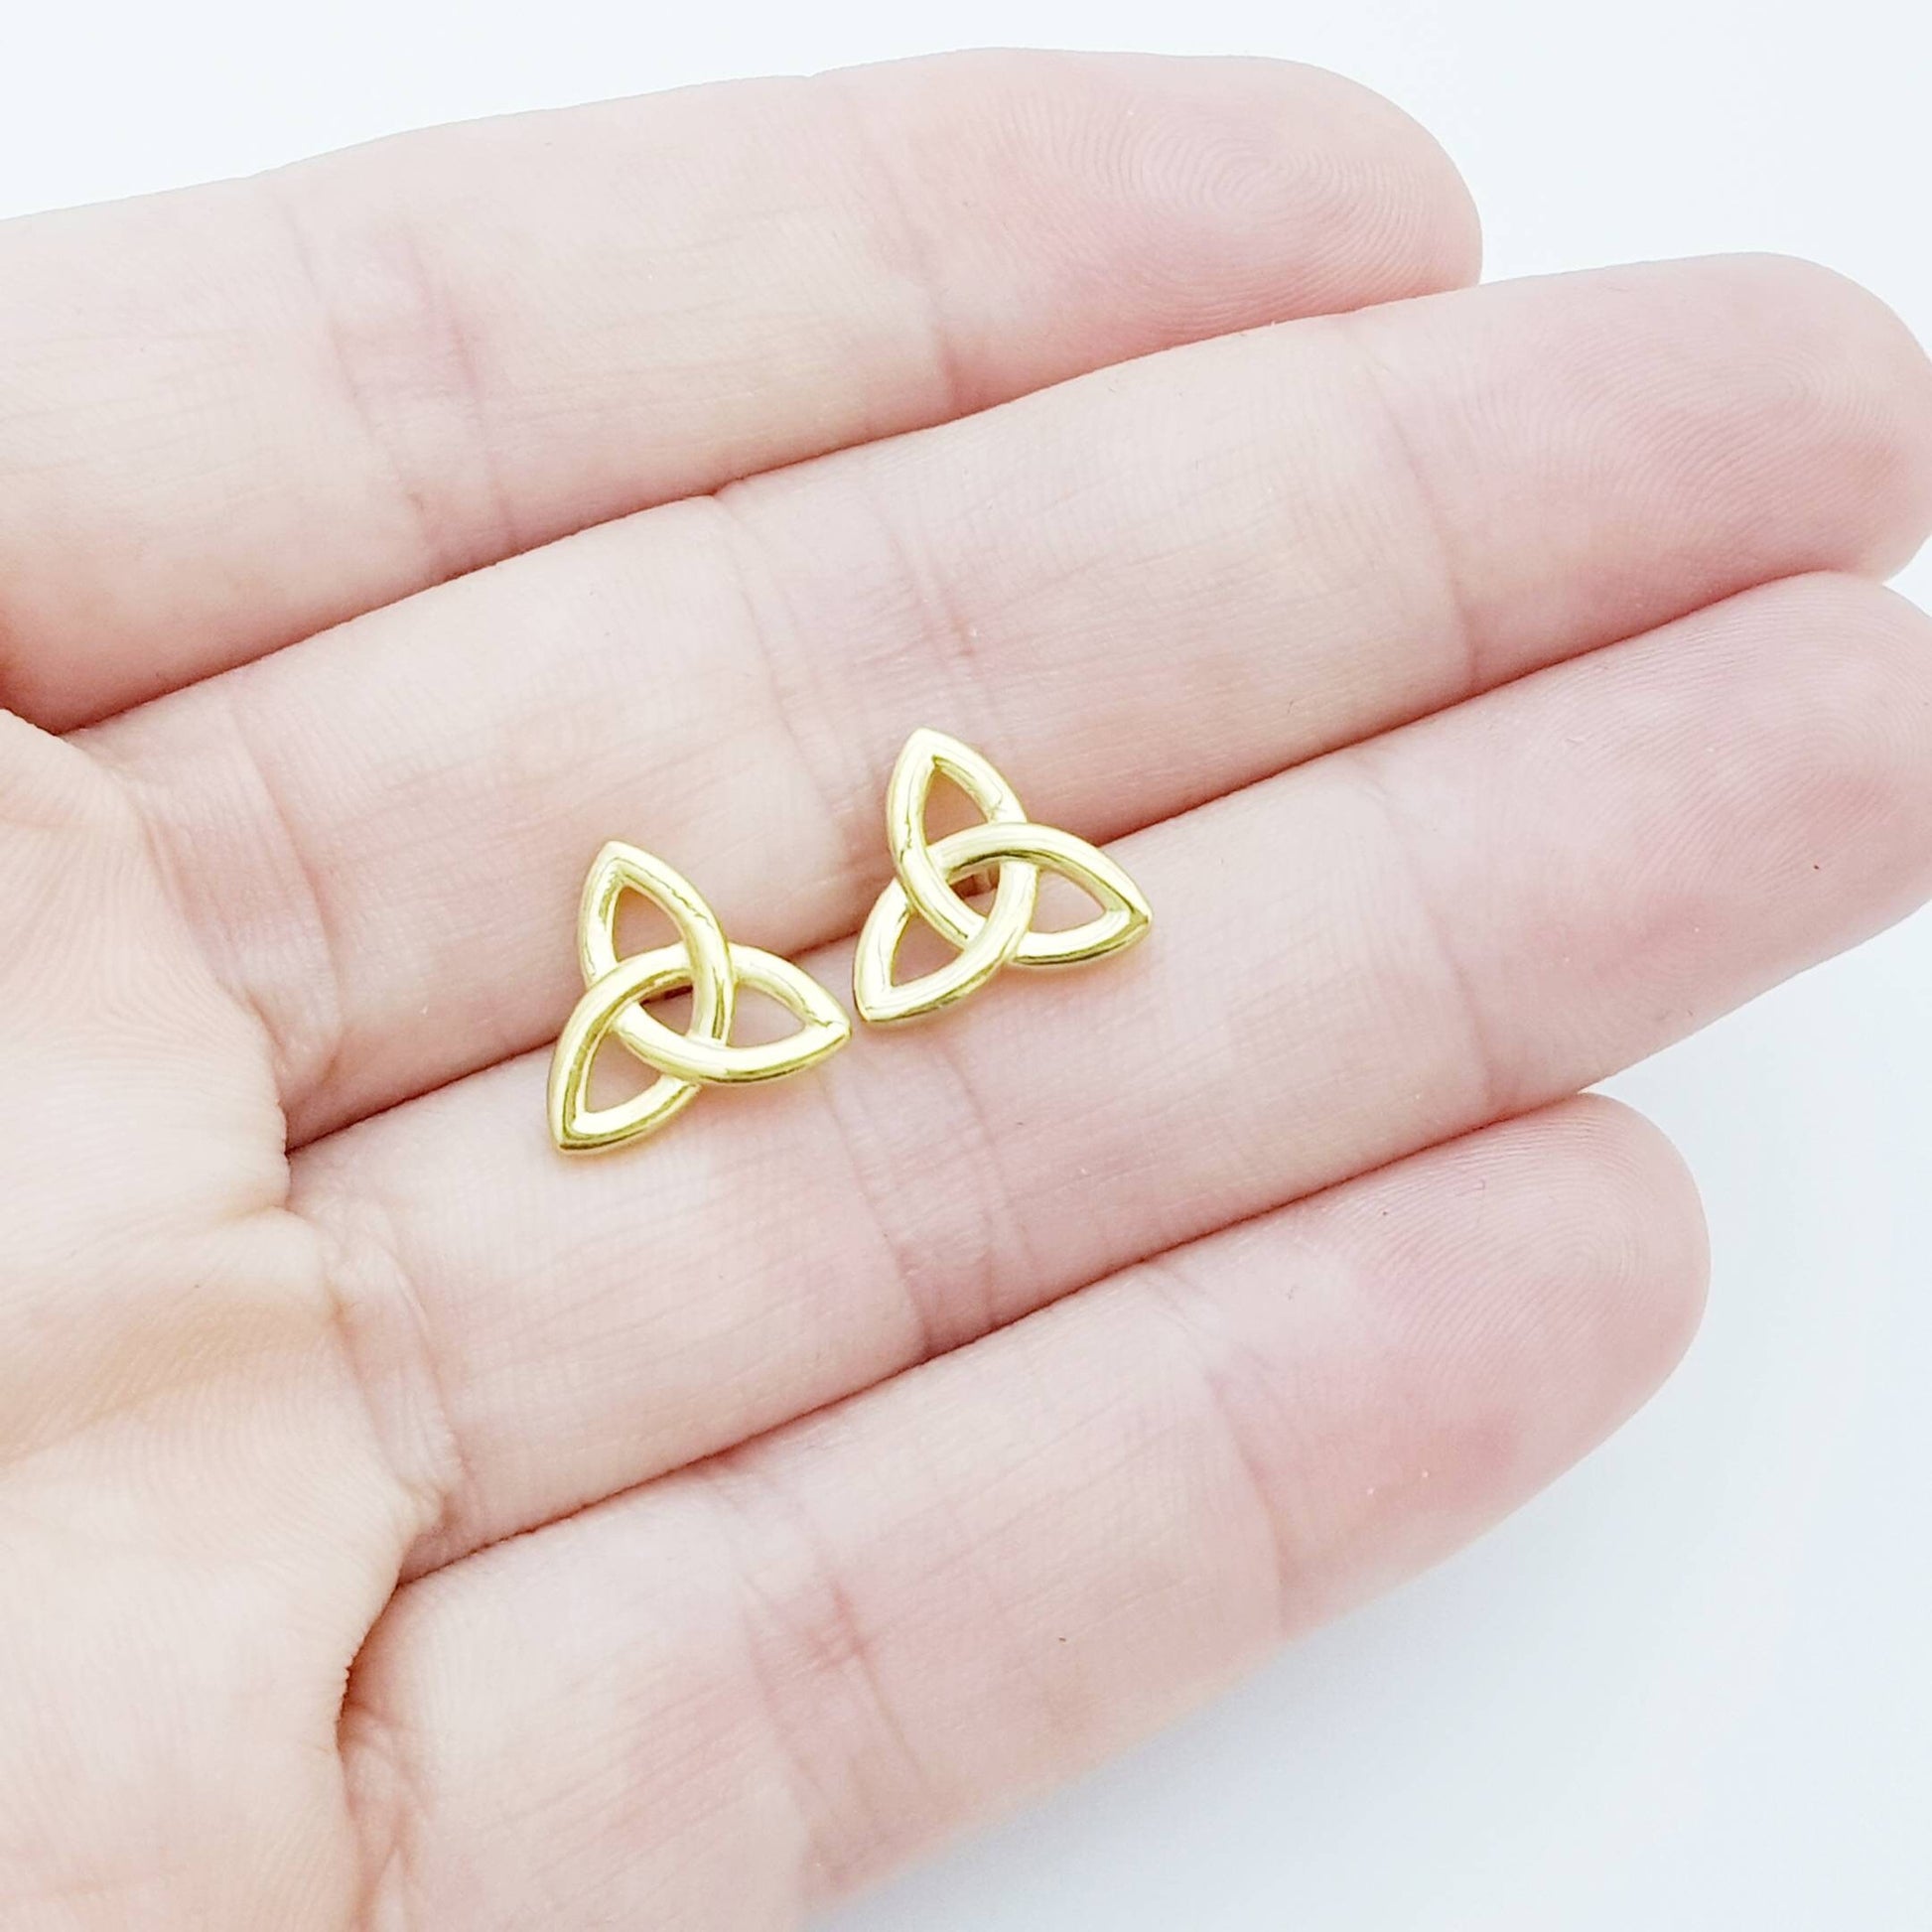 Gold Celtic knot Earrings, Celtic studs, trinity knot stud earrings, simple stud earrings